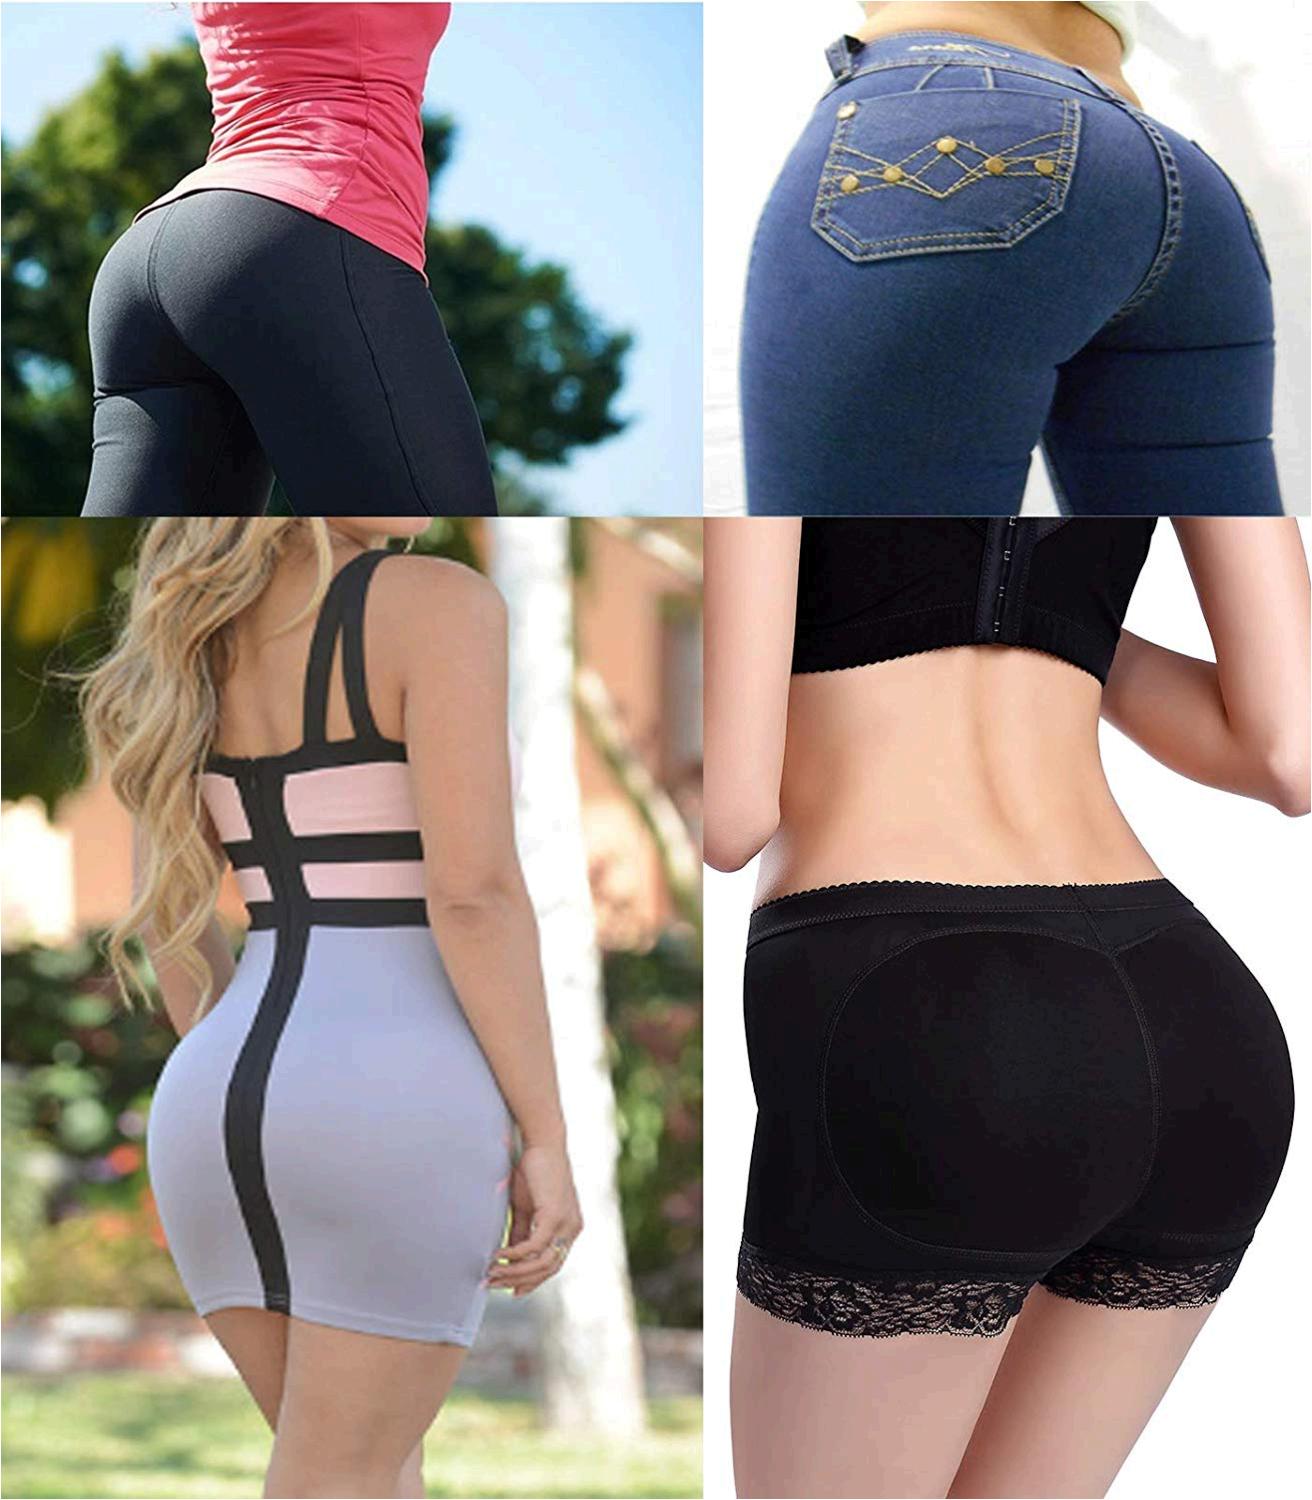 Butt Lifter Hip Enhancer Pads Underwear Shapewear Lace Padded Black 